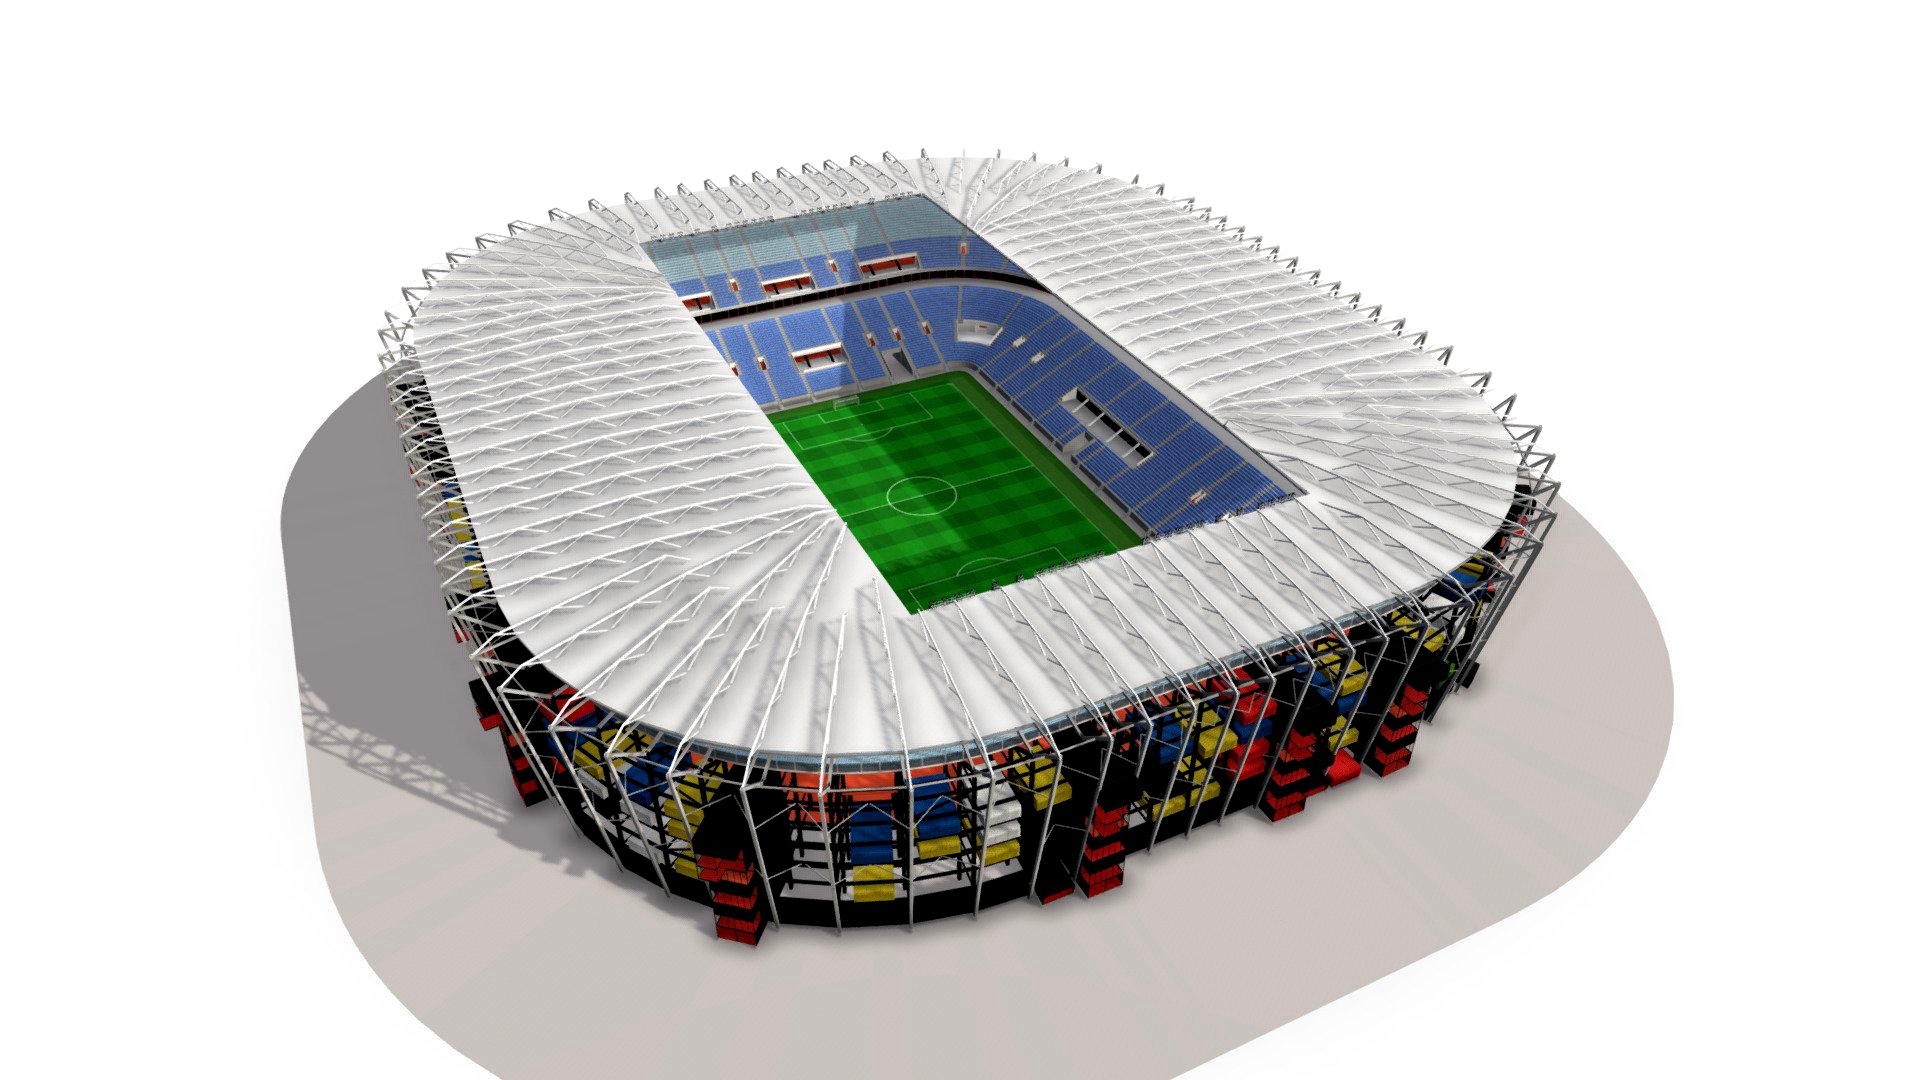 Stadium 974 Fifa world cup 2022 qatar